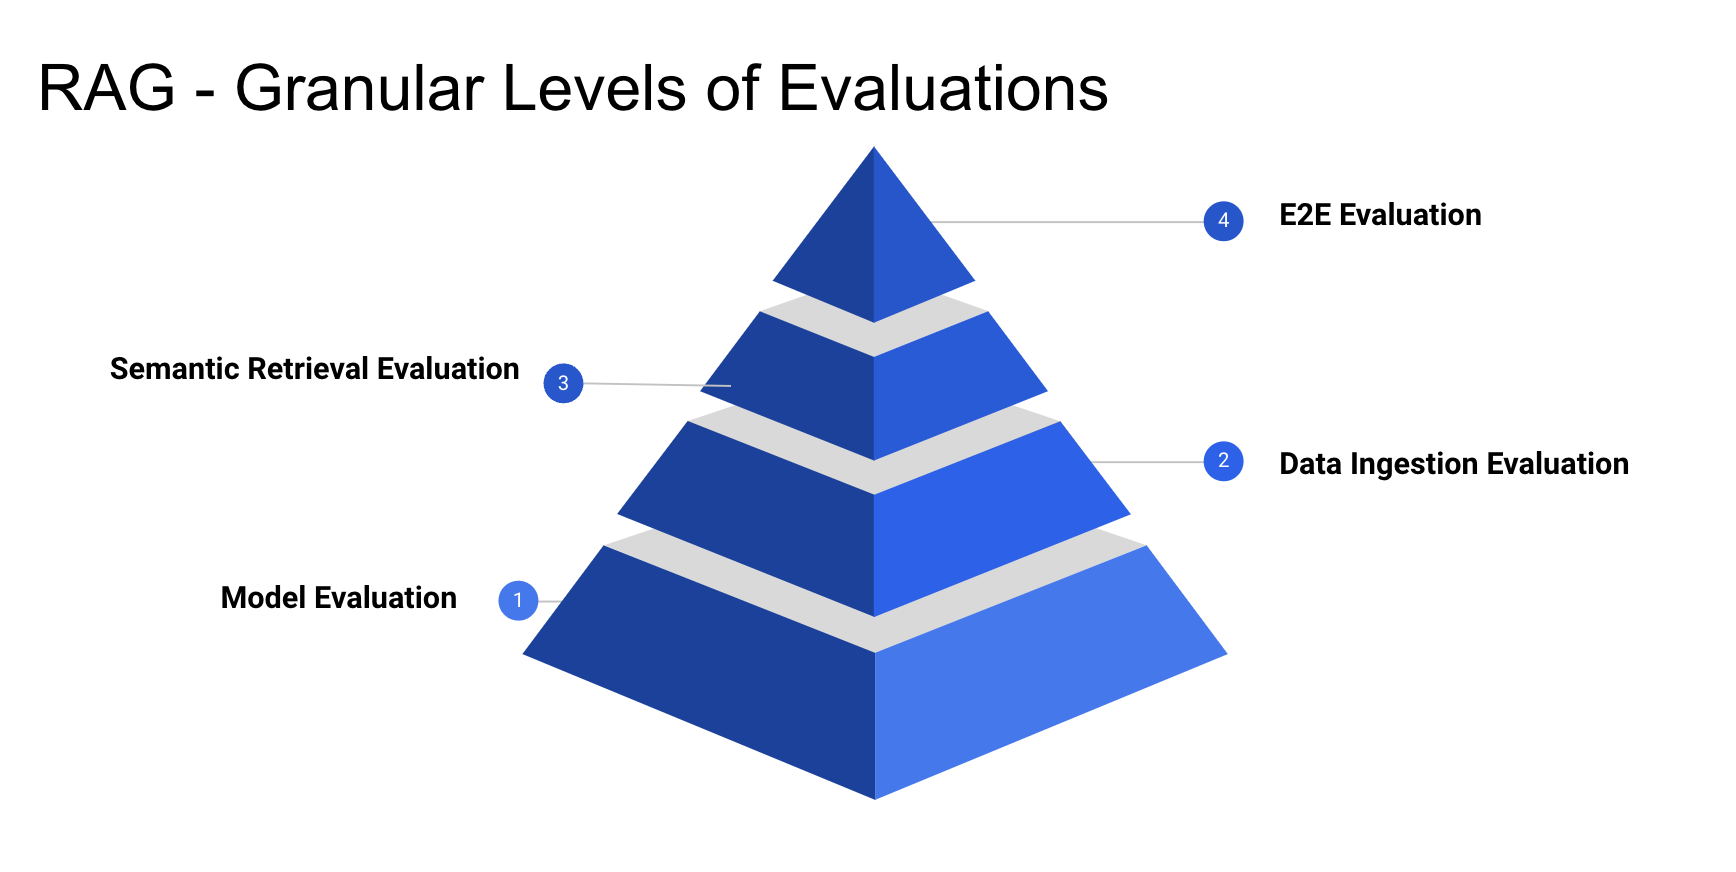 Granular Levels of Evaluation of RAG